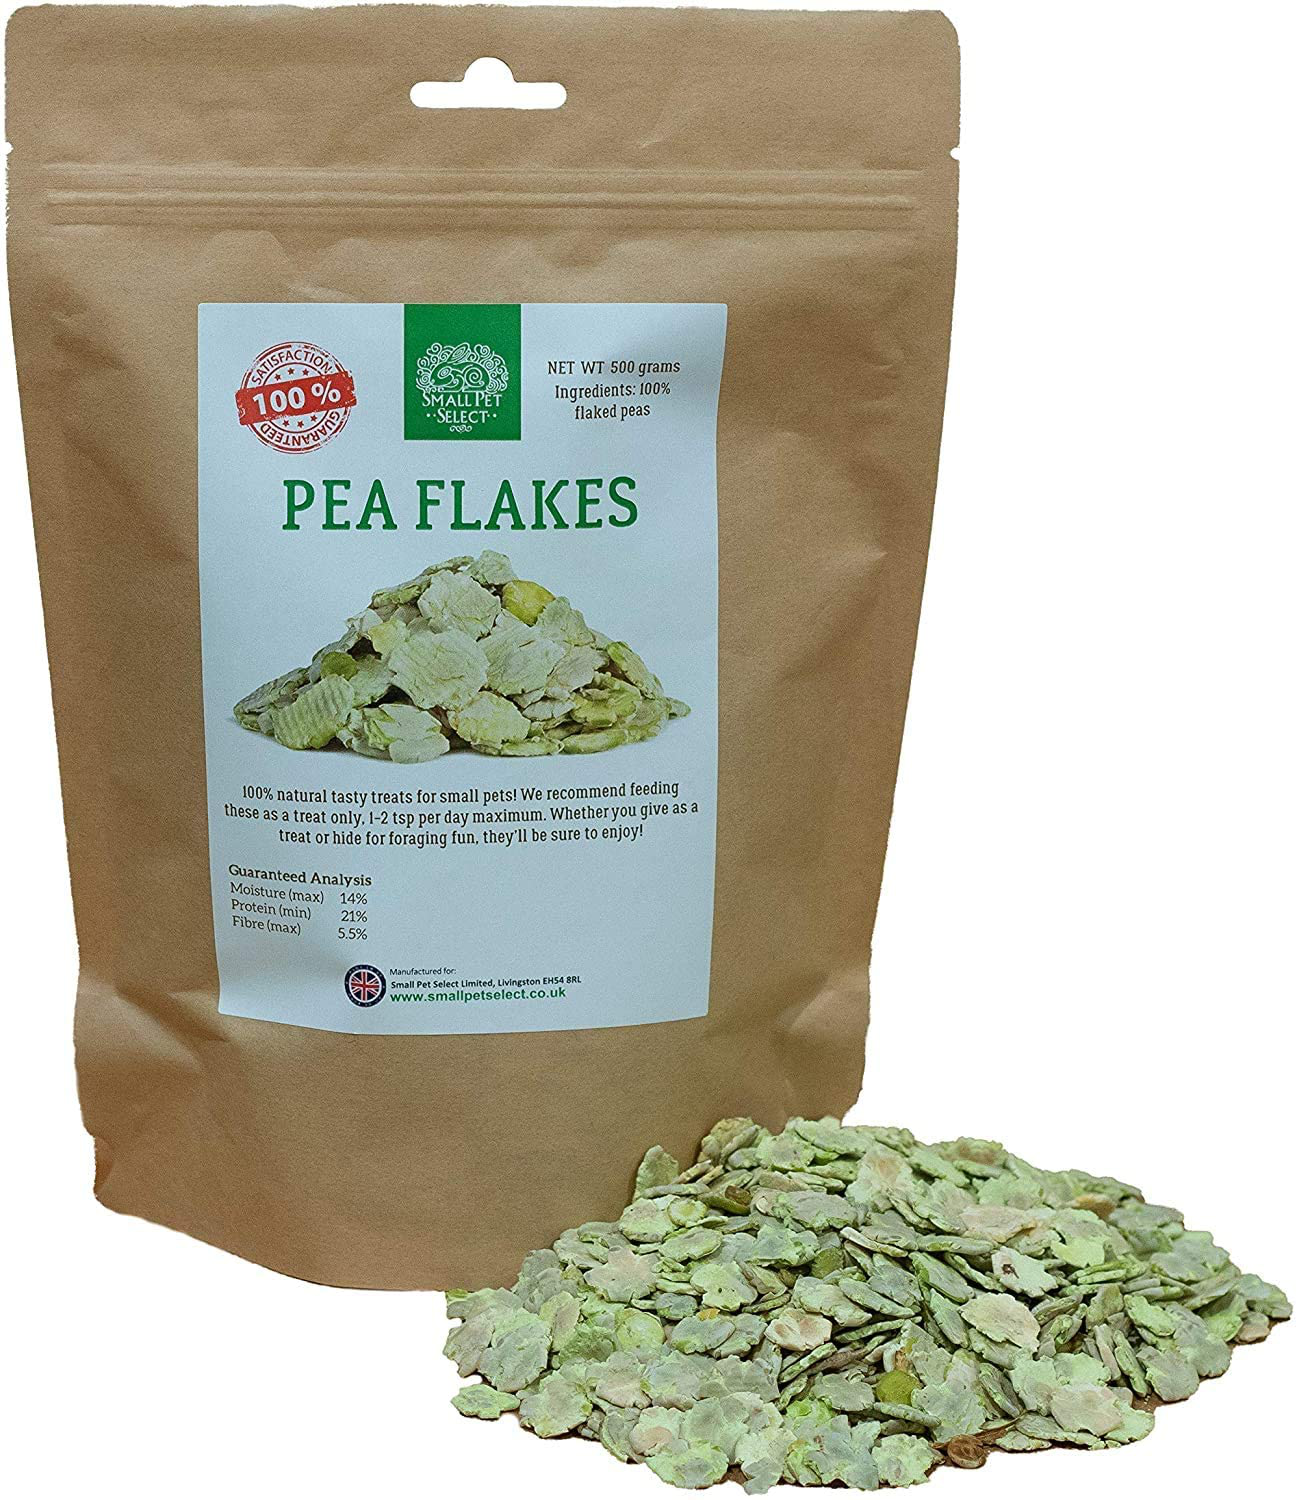 Small Pet Select - Pea Flakes